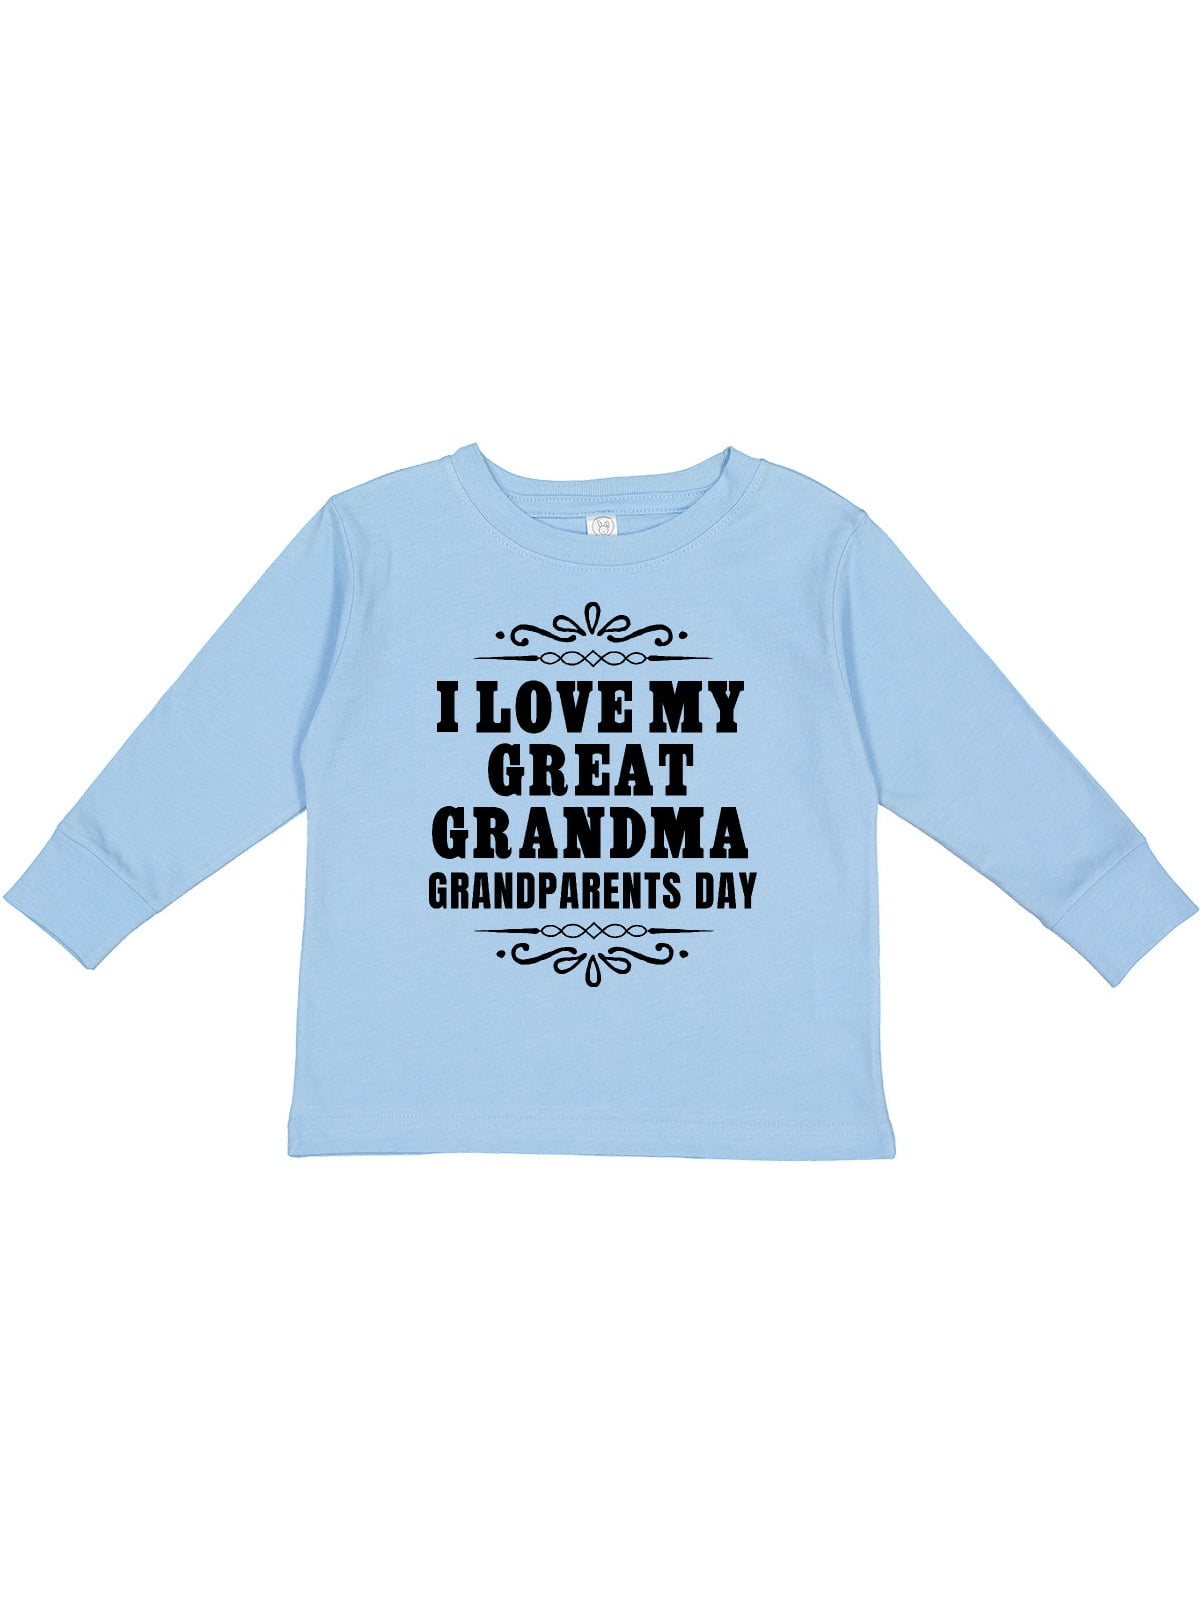 I Really Really Really Love My Great-Grandma Toddler/Kids Sweatshirt 